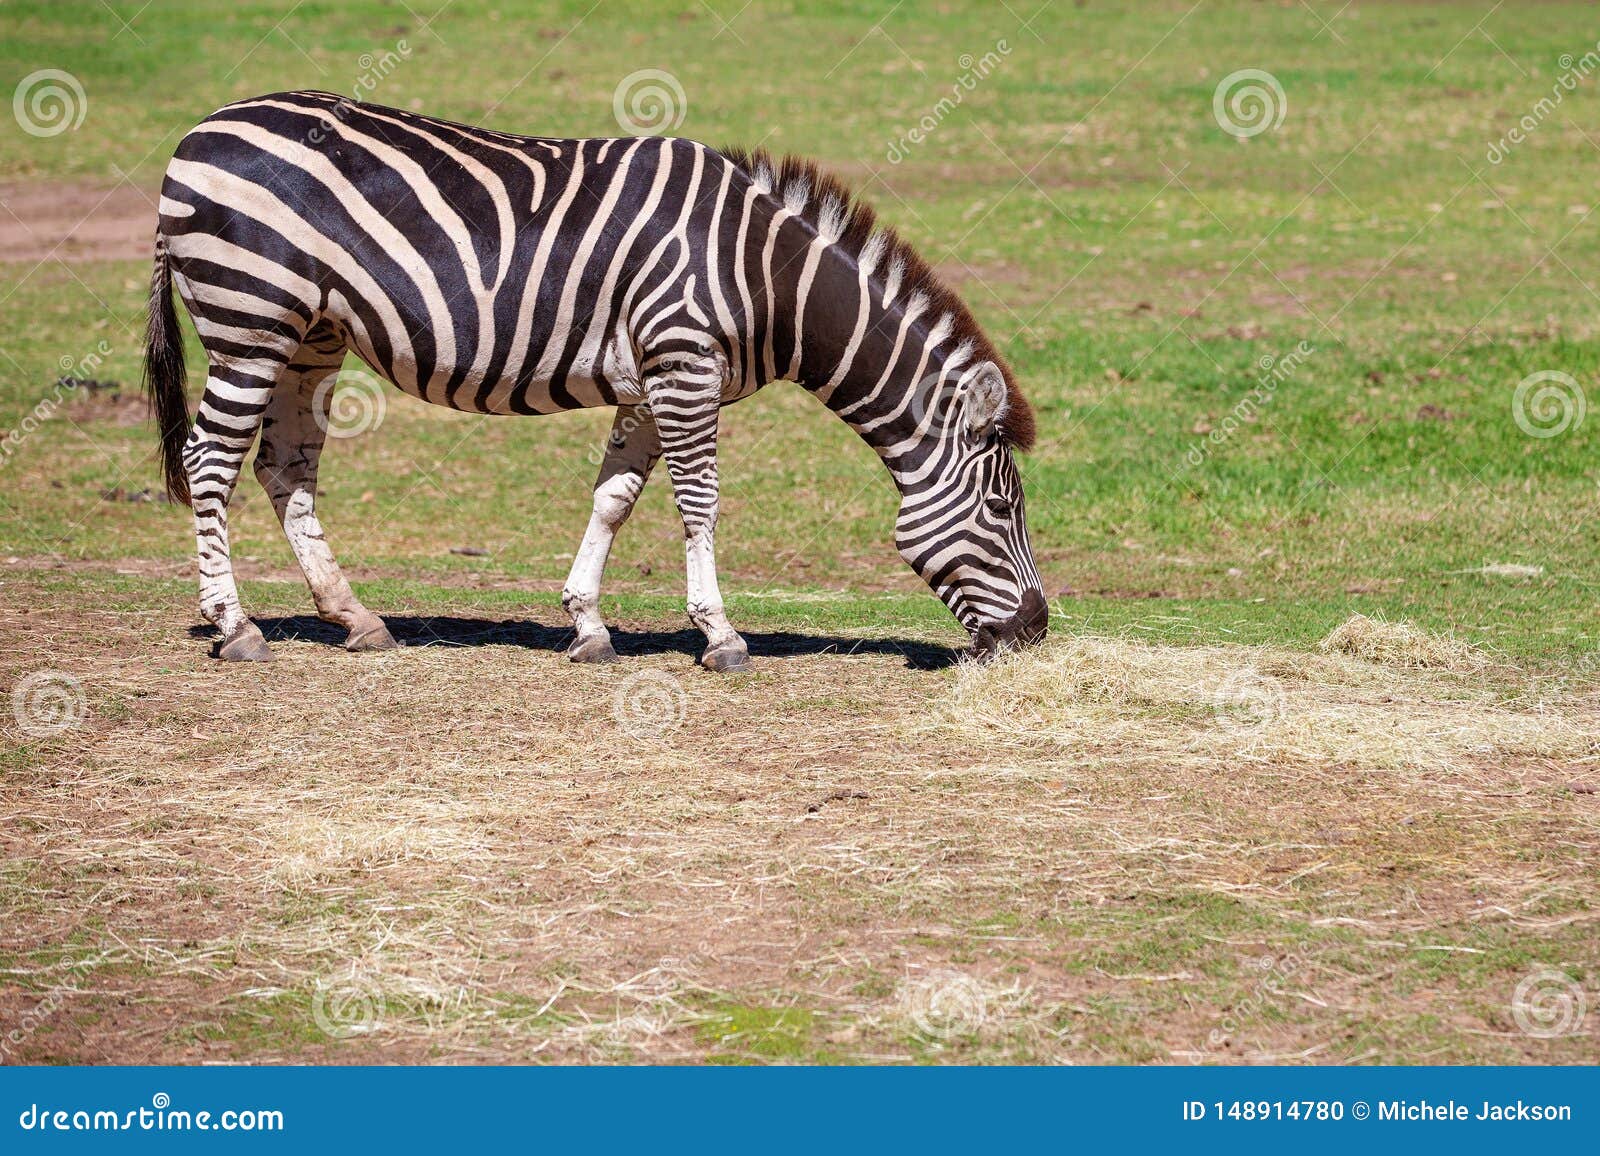 are zebras black with white stripes